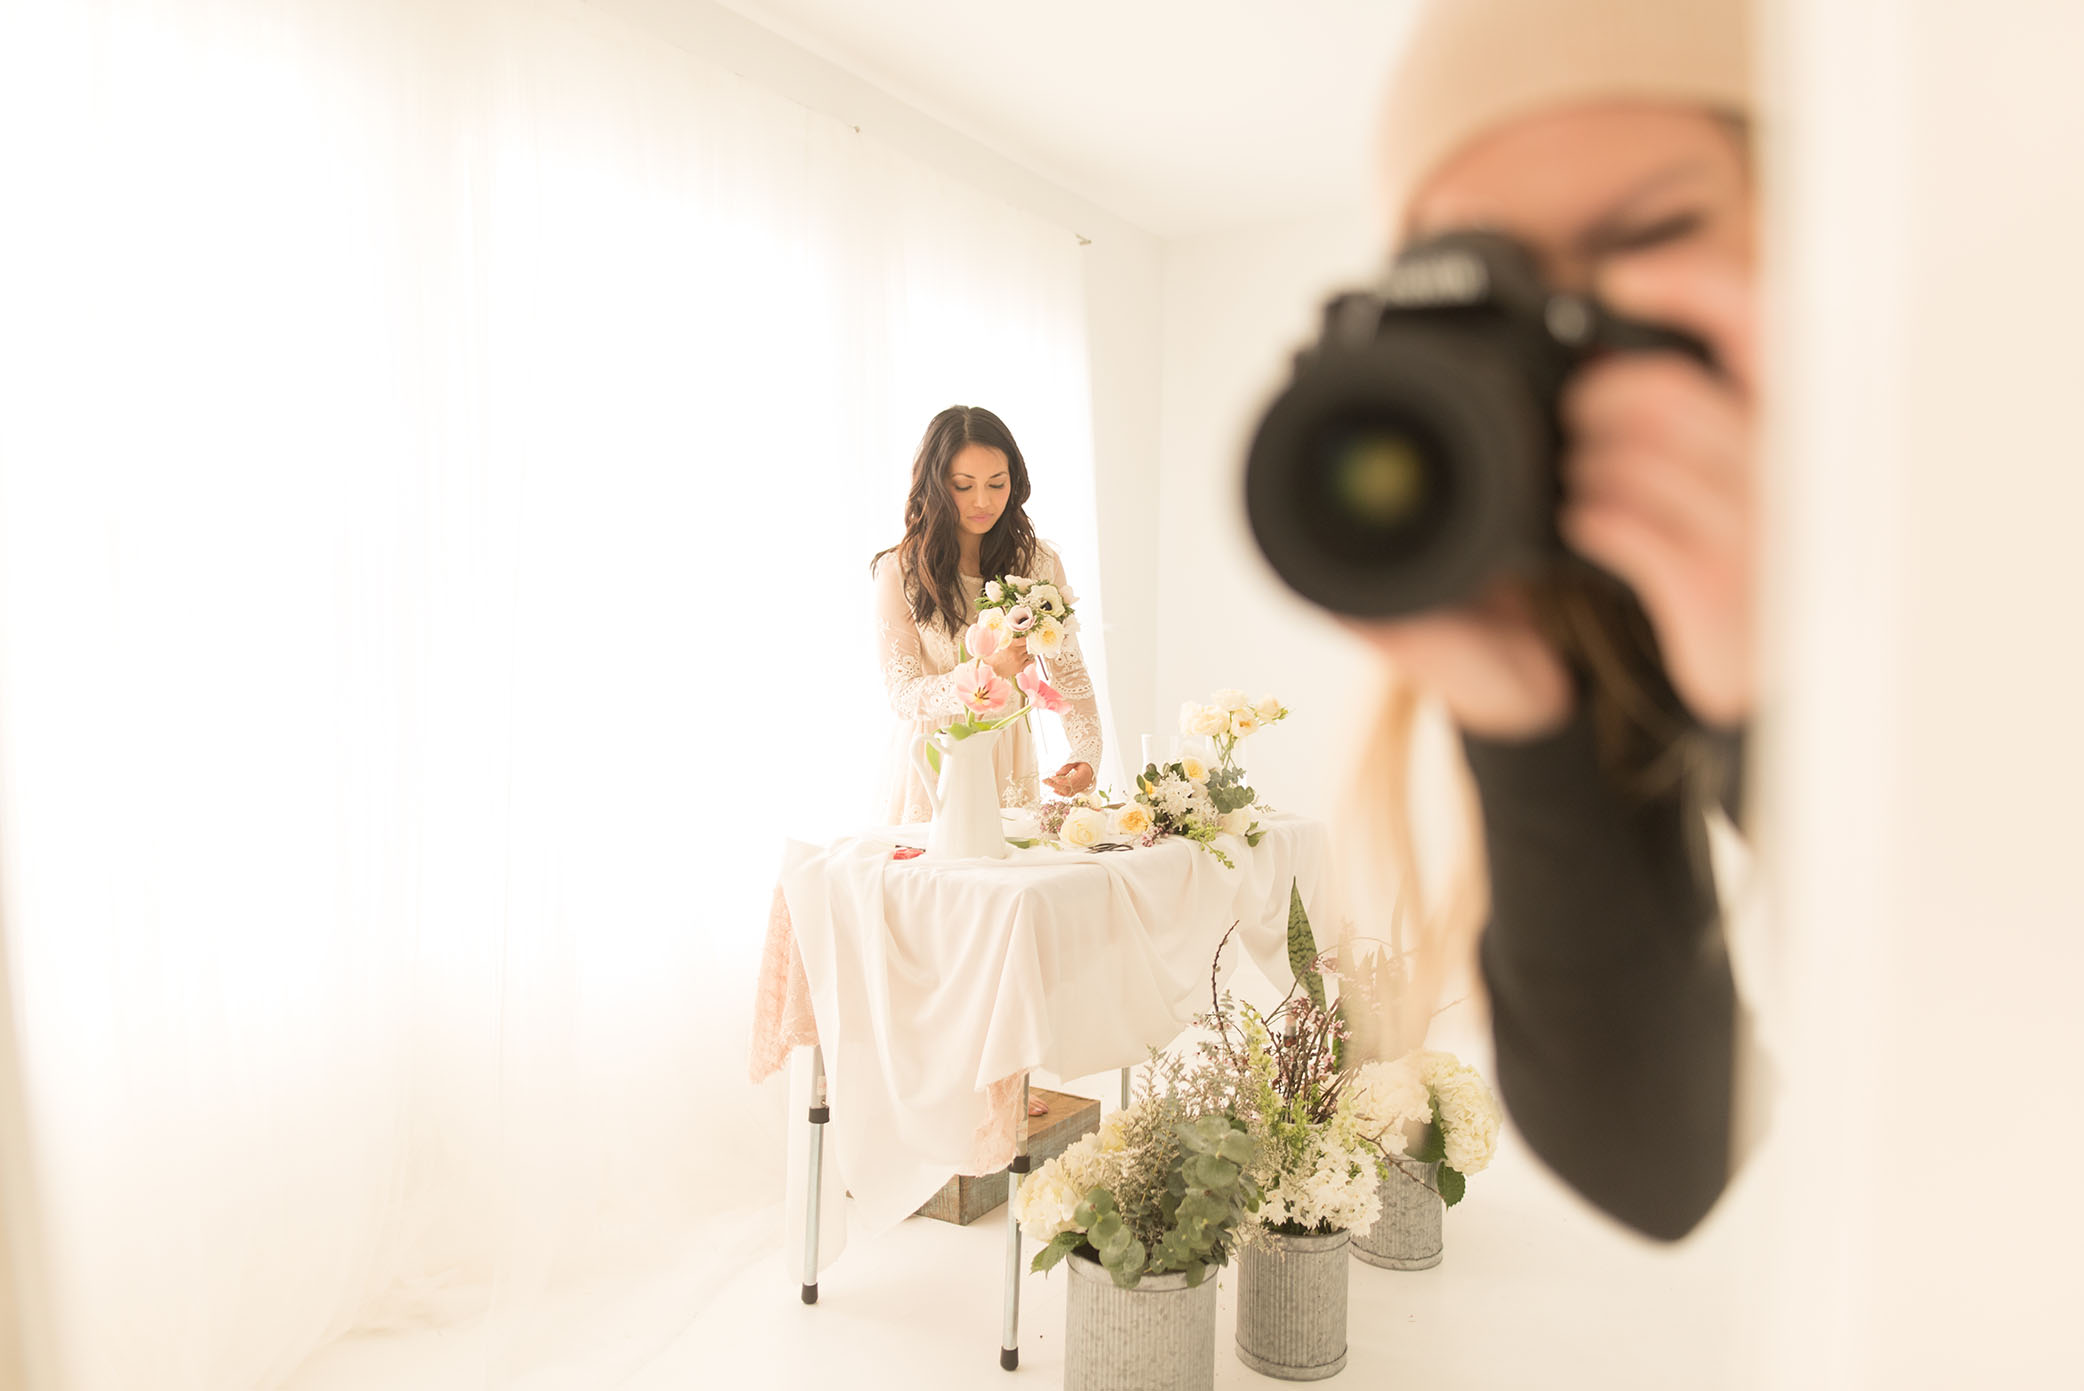 A photographer captures a woman arranging flowers. 